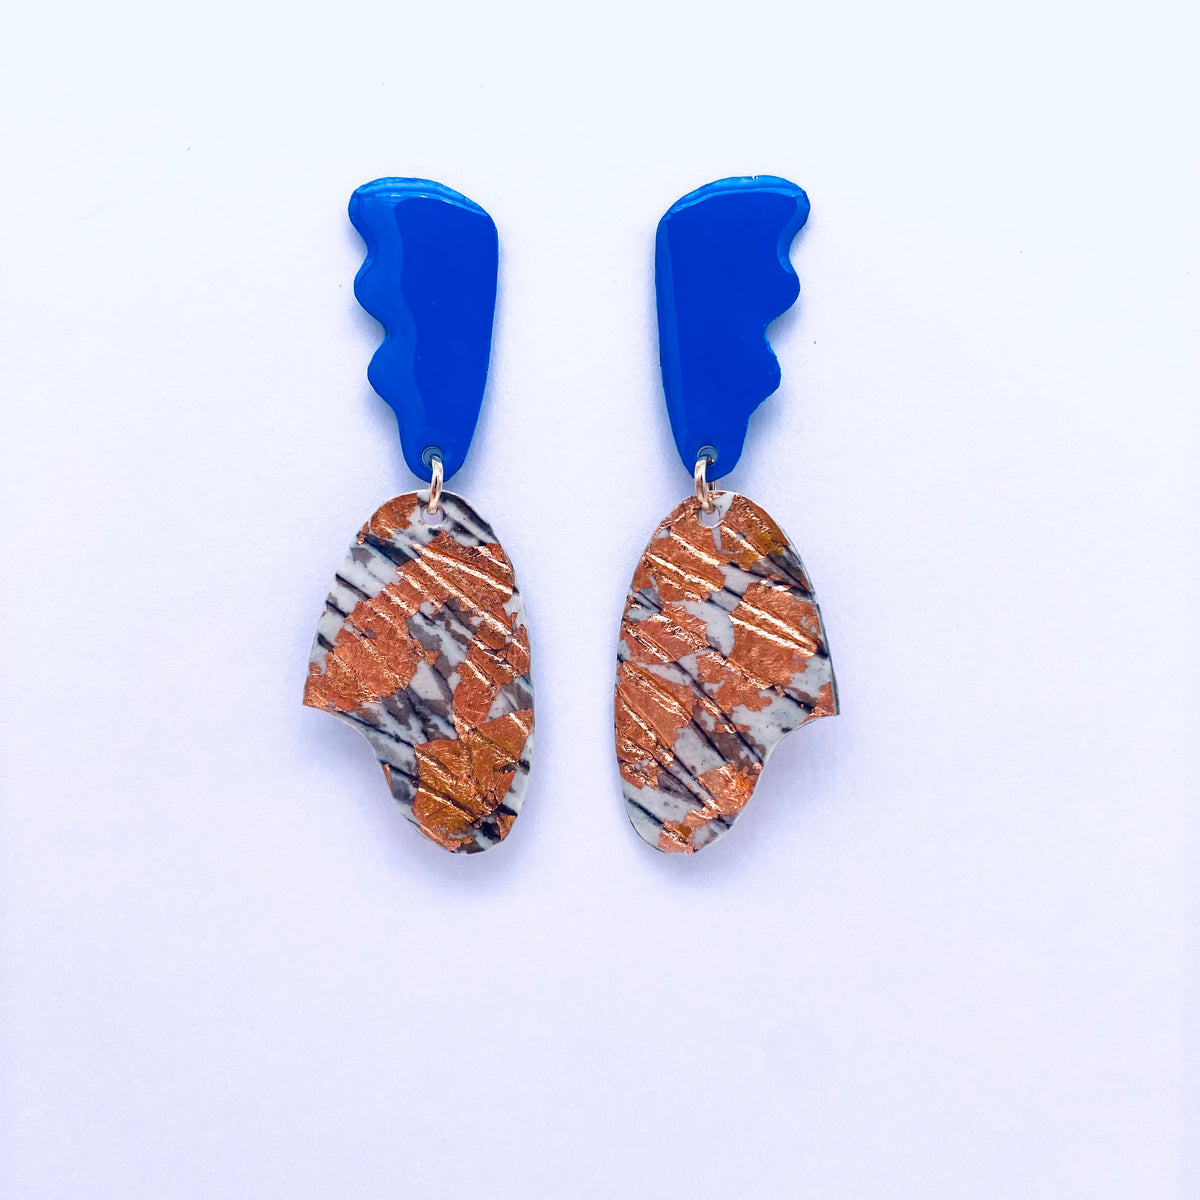 Tidal sgraffito textile earrings in mariner’s blue/grey/rose-gold